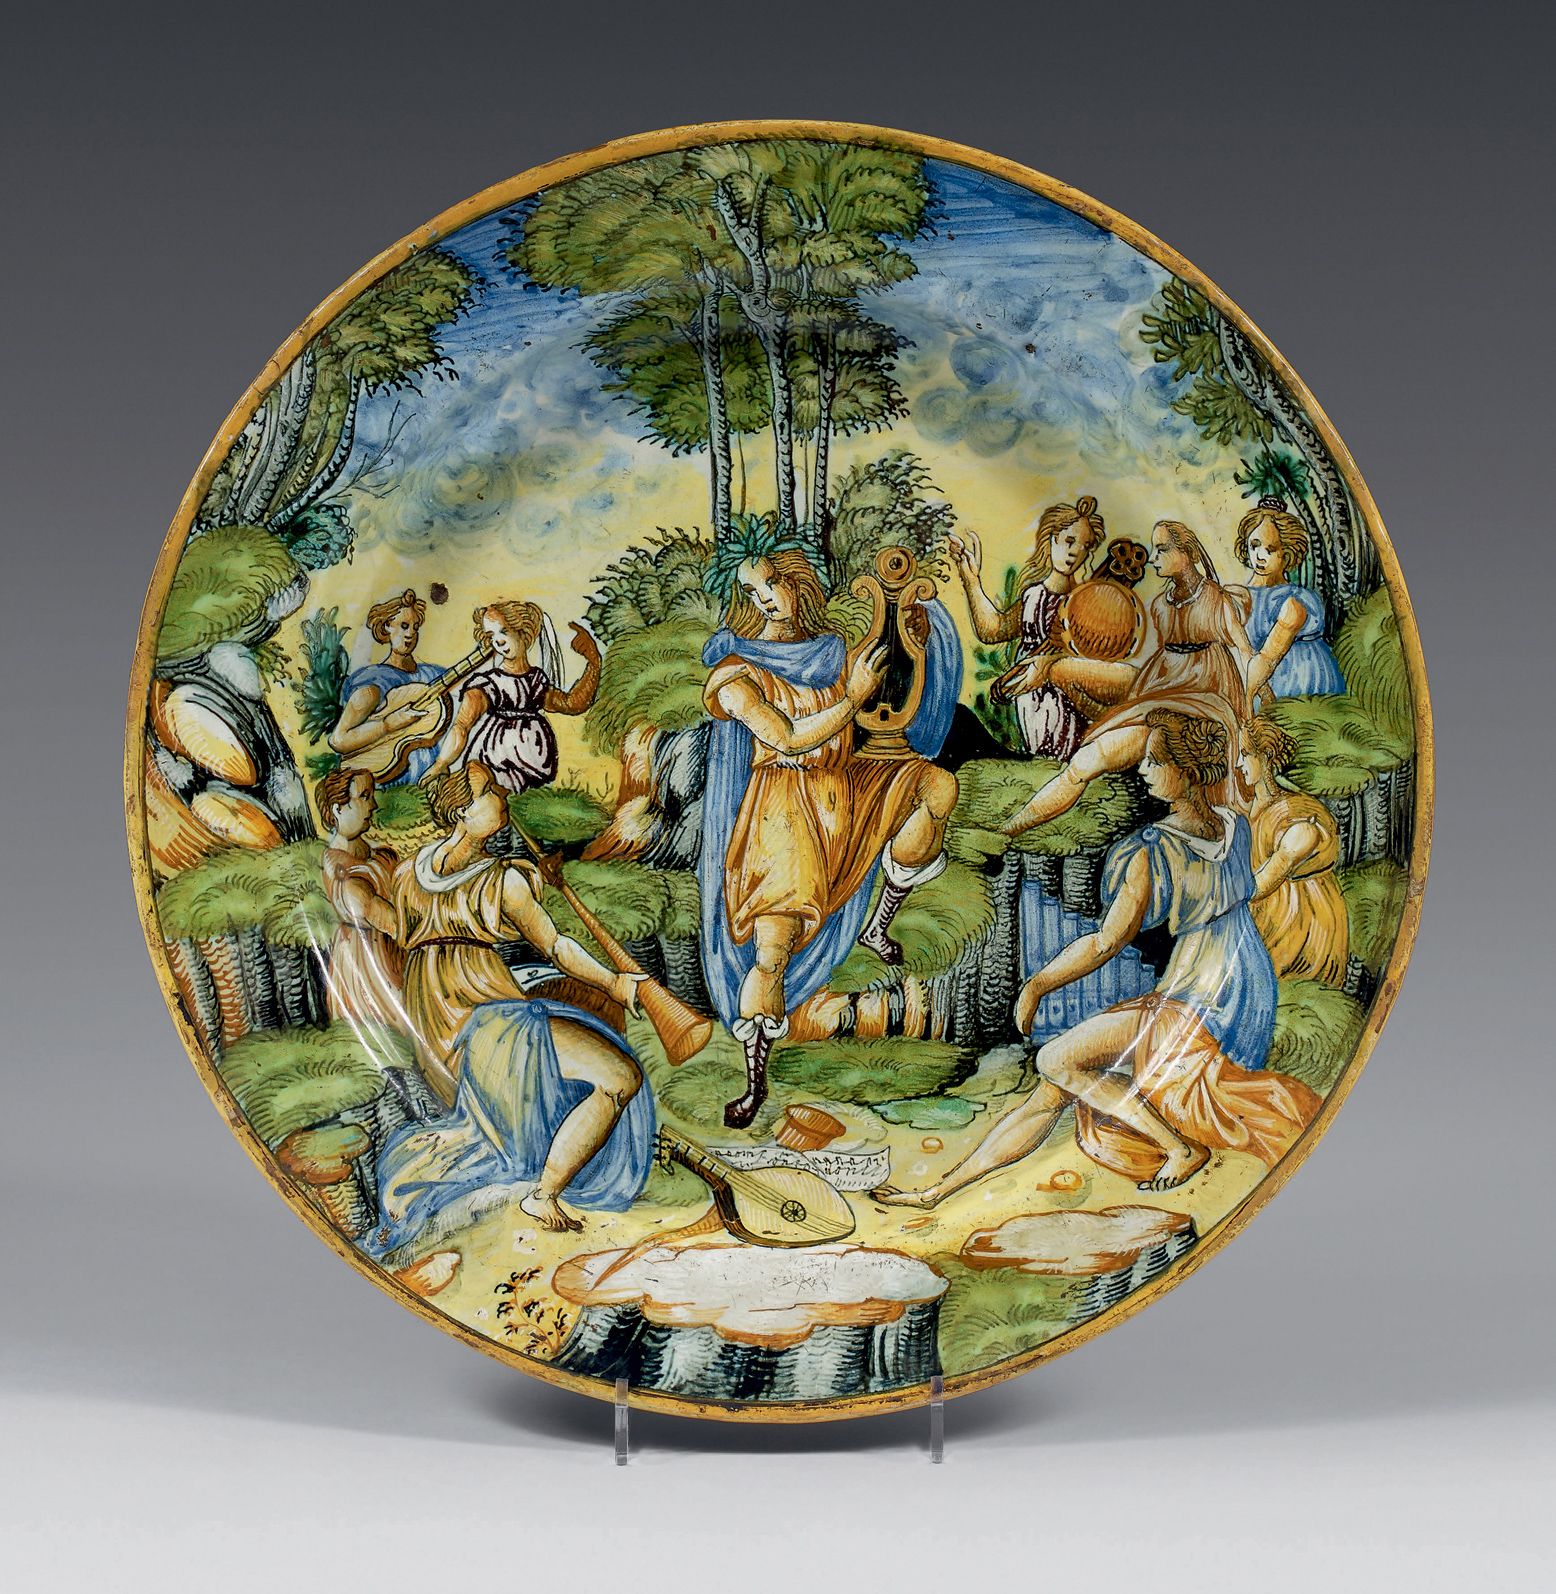 Null 里昂或NEVERS里昂陶器盘，16世纪末至17世纪初。
17世纪。存货编号为红色的AR 6067。纯粹的蓝色、绿色、赭石和锰的装饰，描绘了
阿波罗在弹&hellip;